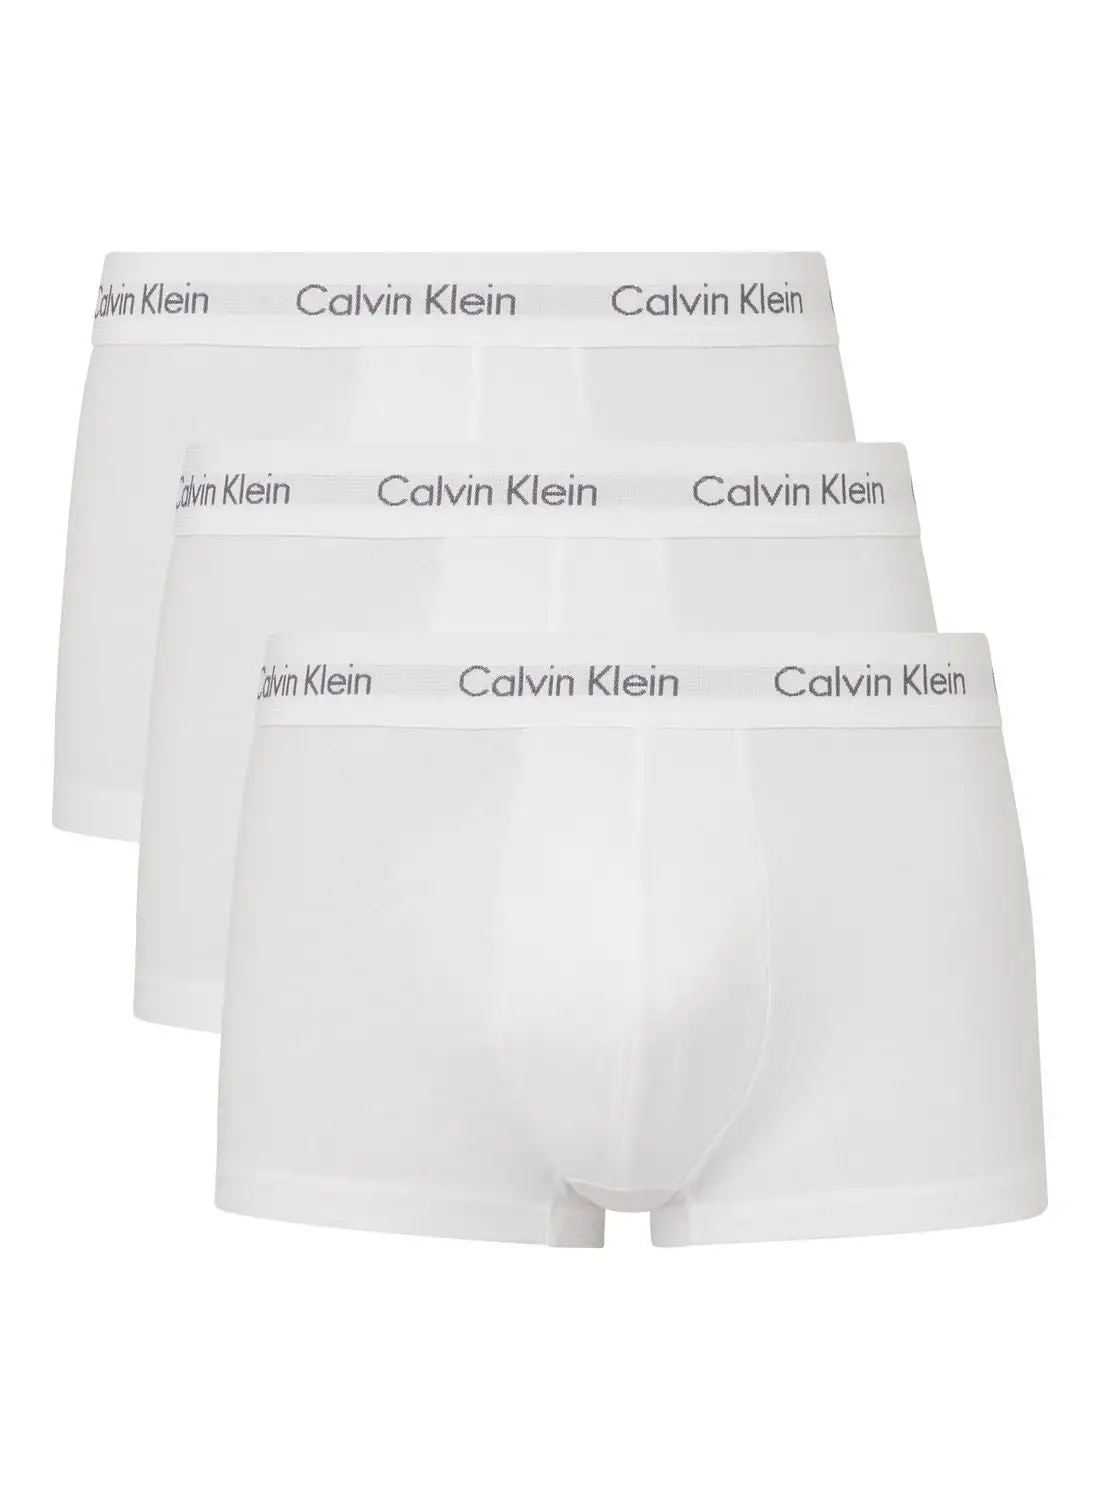 CALVIN KLEIN 3 Pack Assorted Trunks